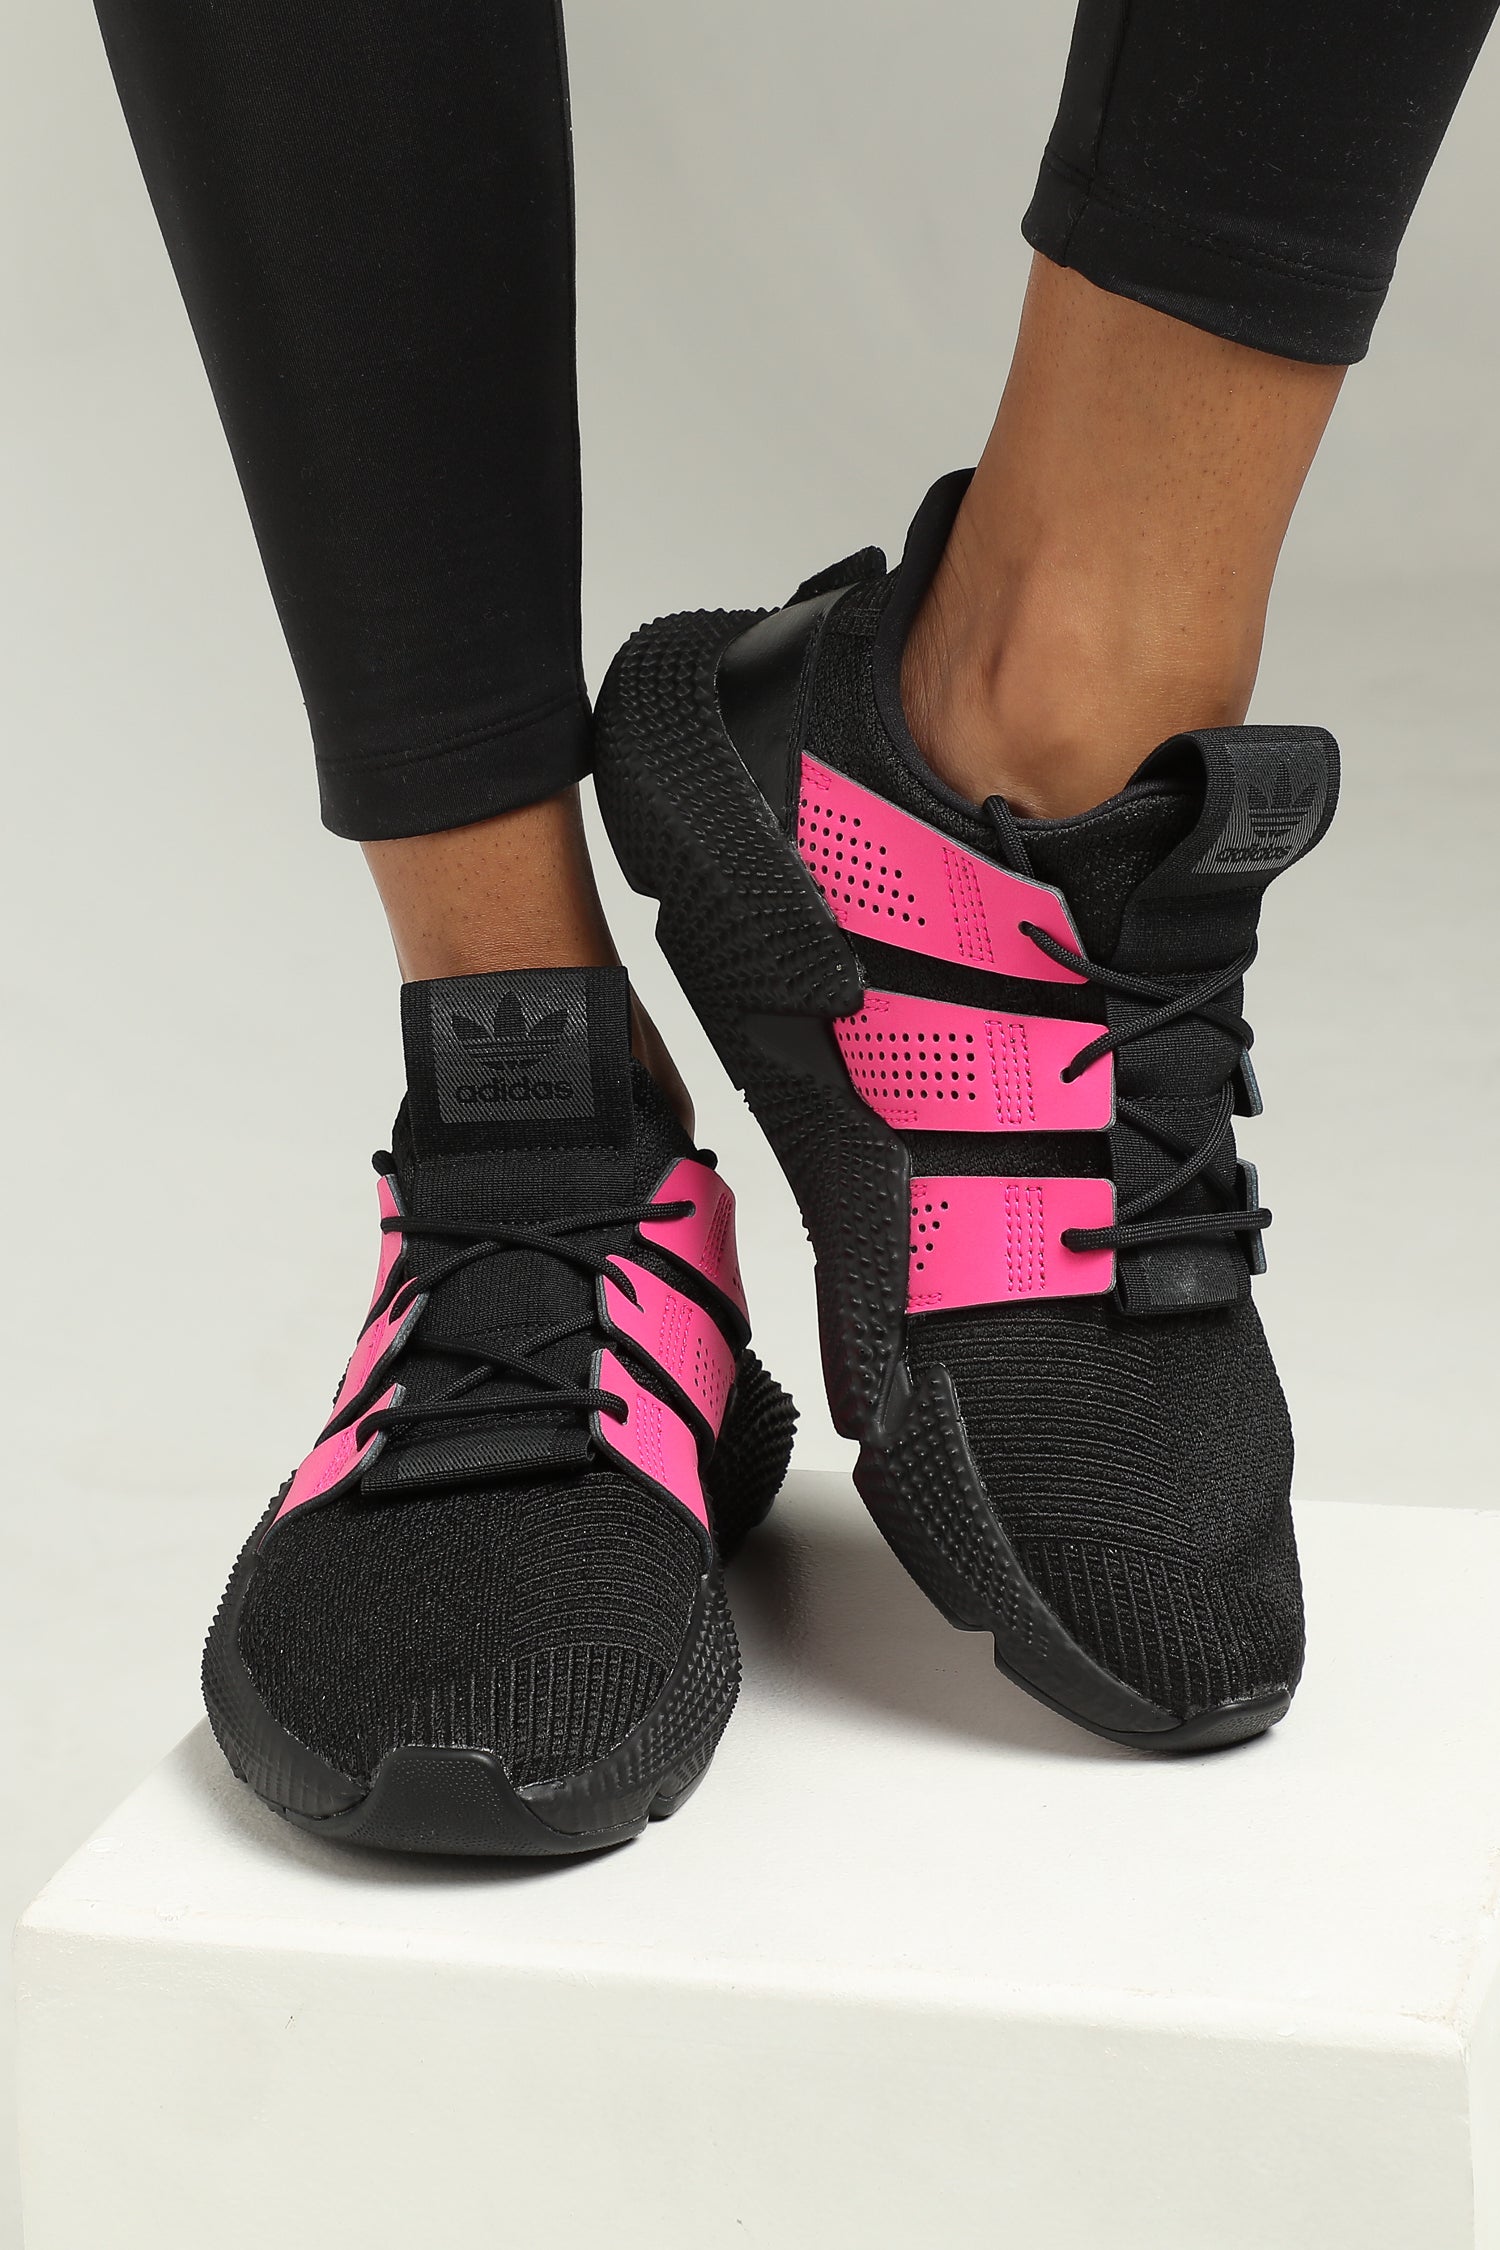 Adidas Women's Prophere Black/Pink 